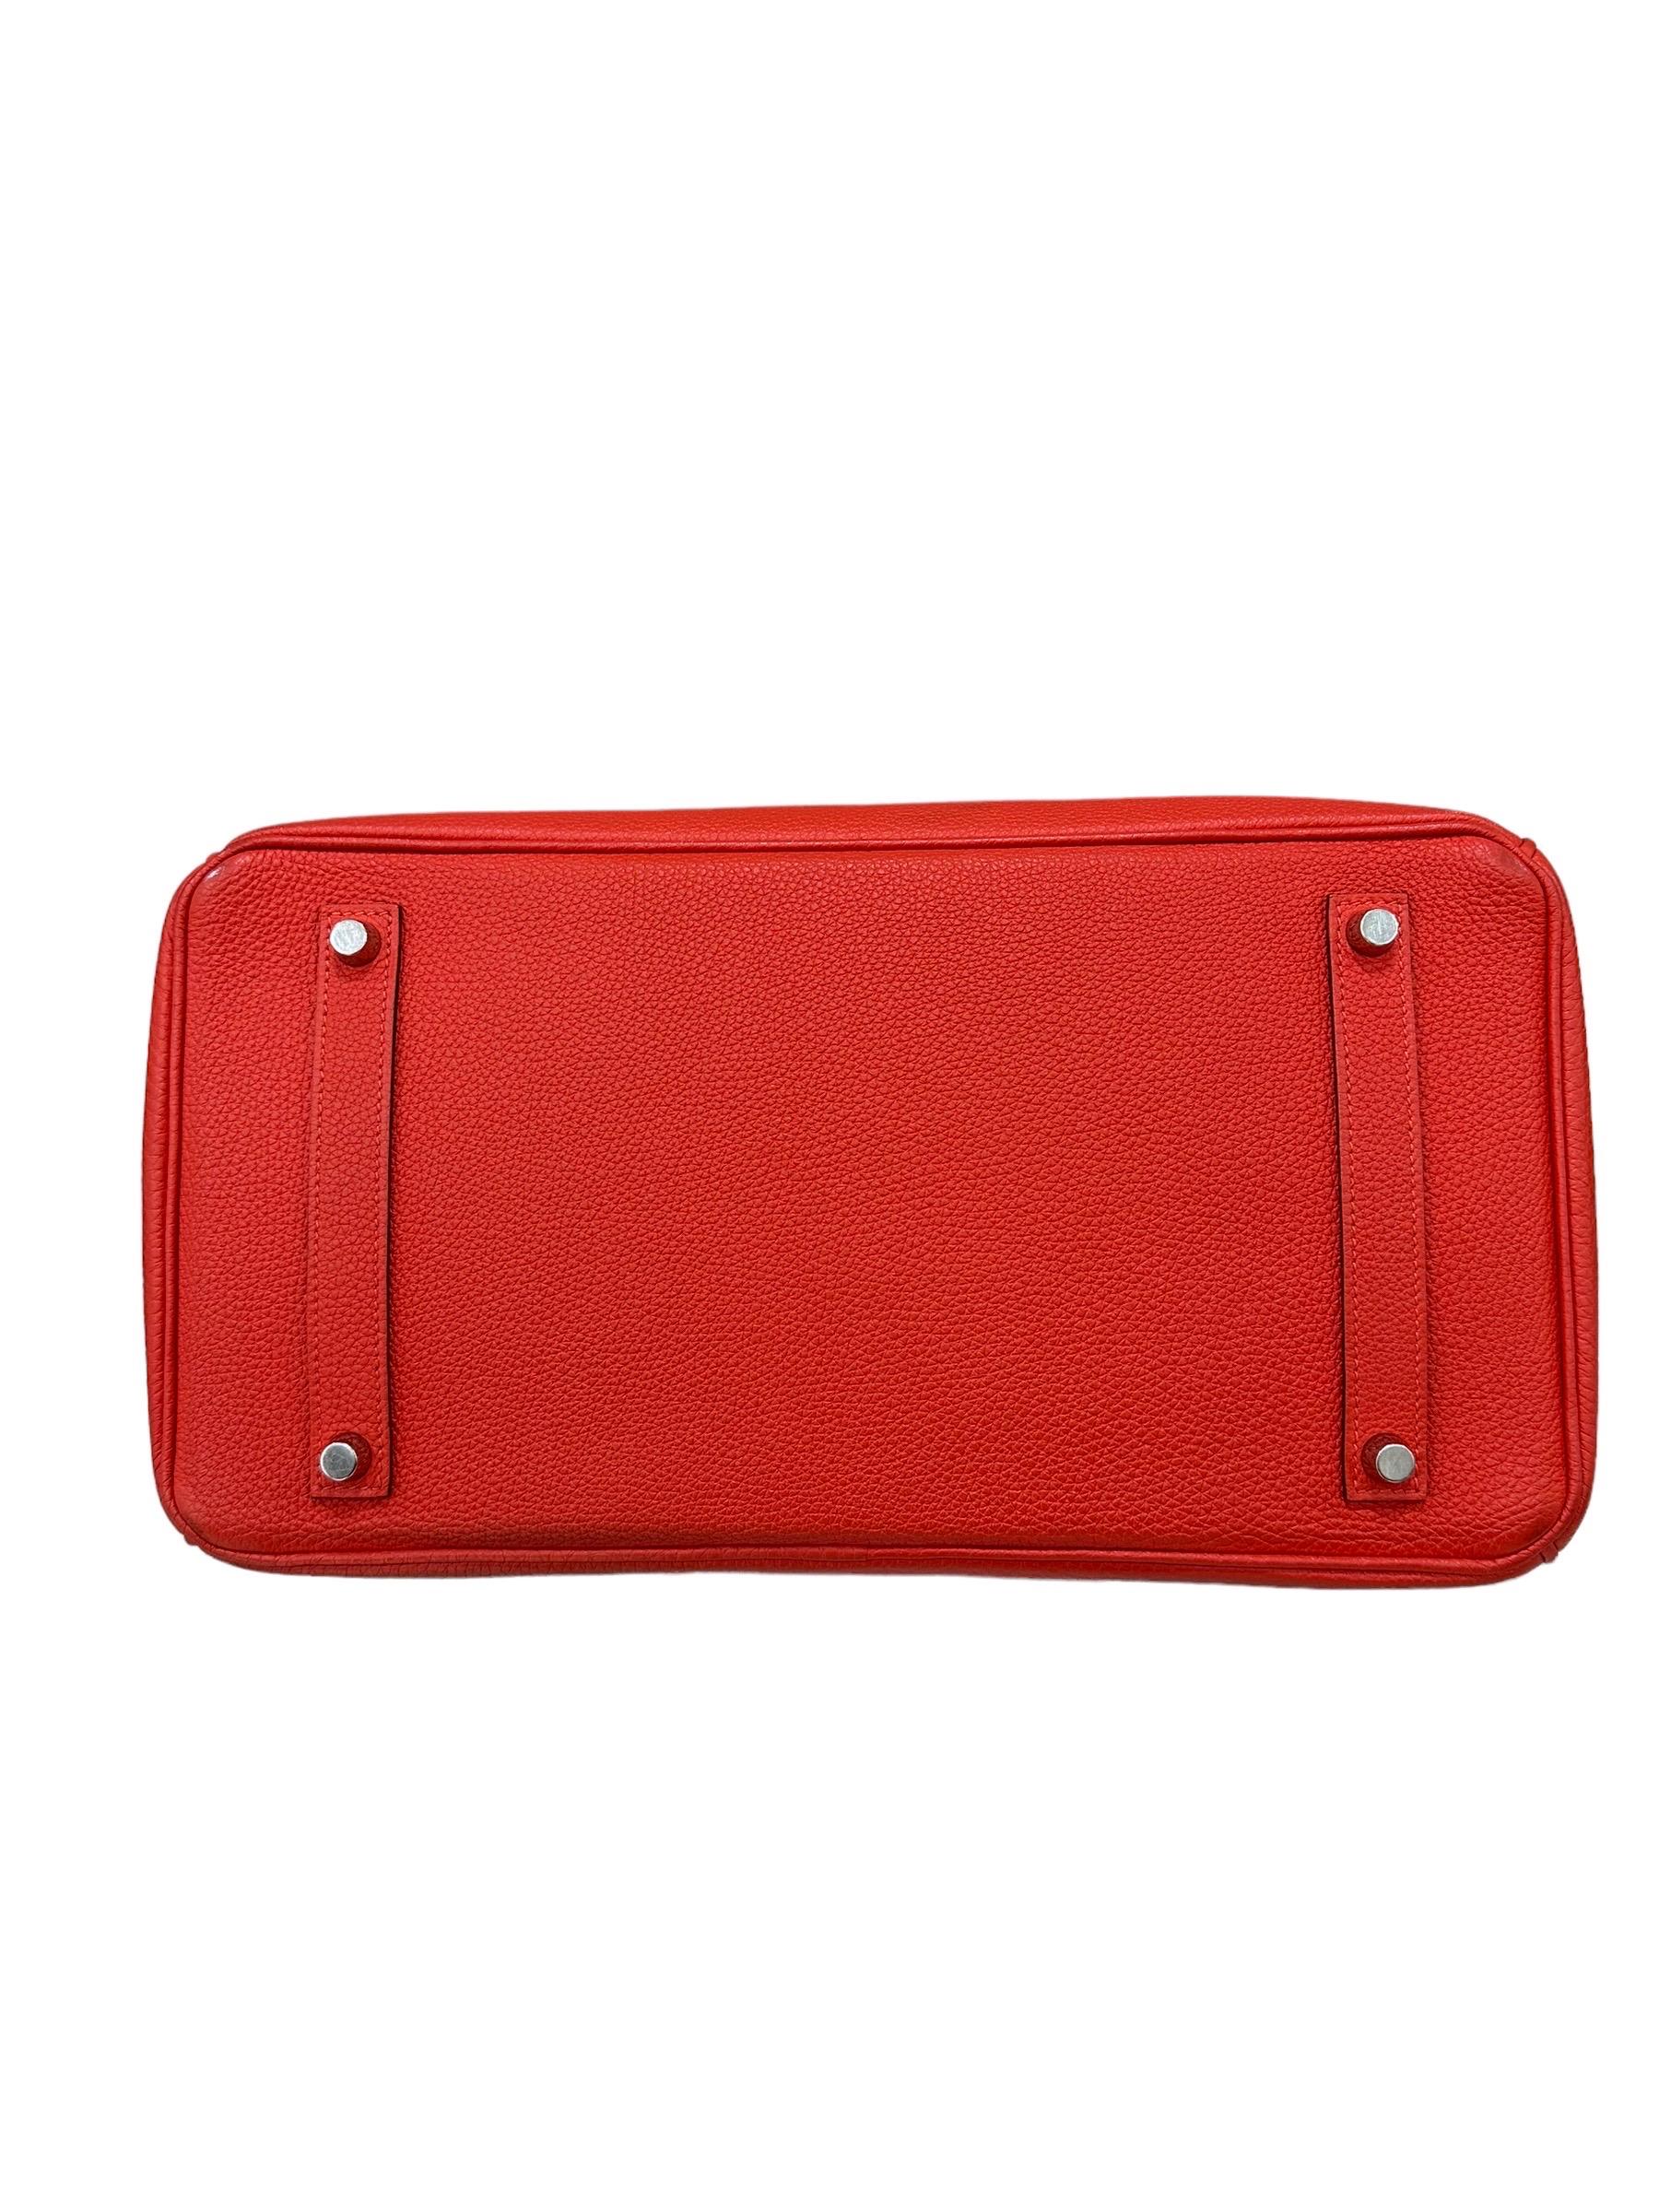 2011 Hermès Birkin 35 Togo Leather Rouge Capucine Top Handle Bag en vente 7